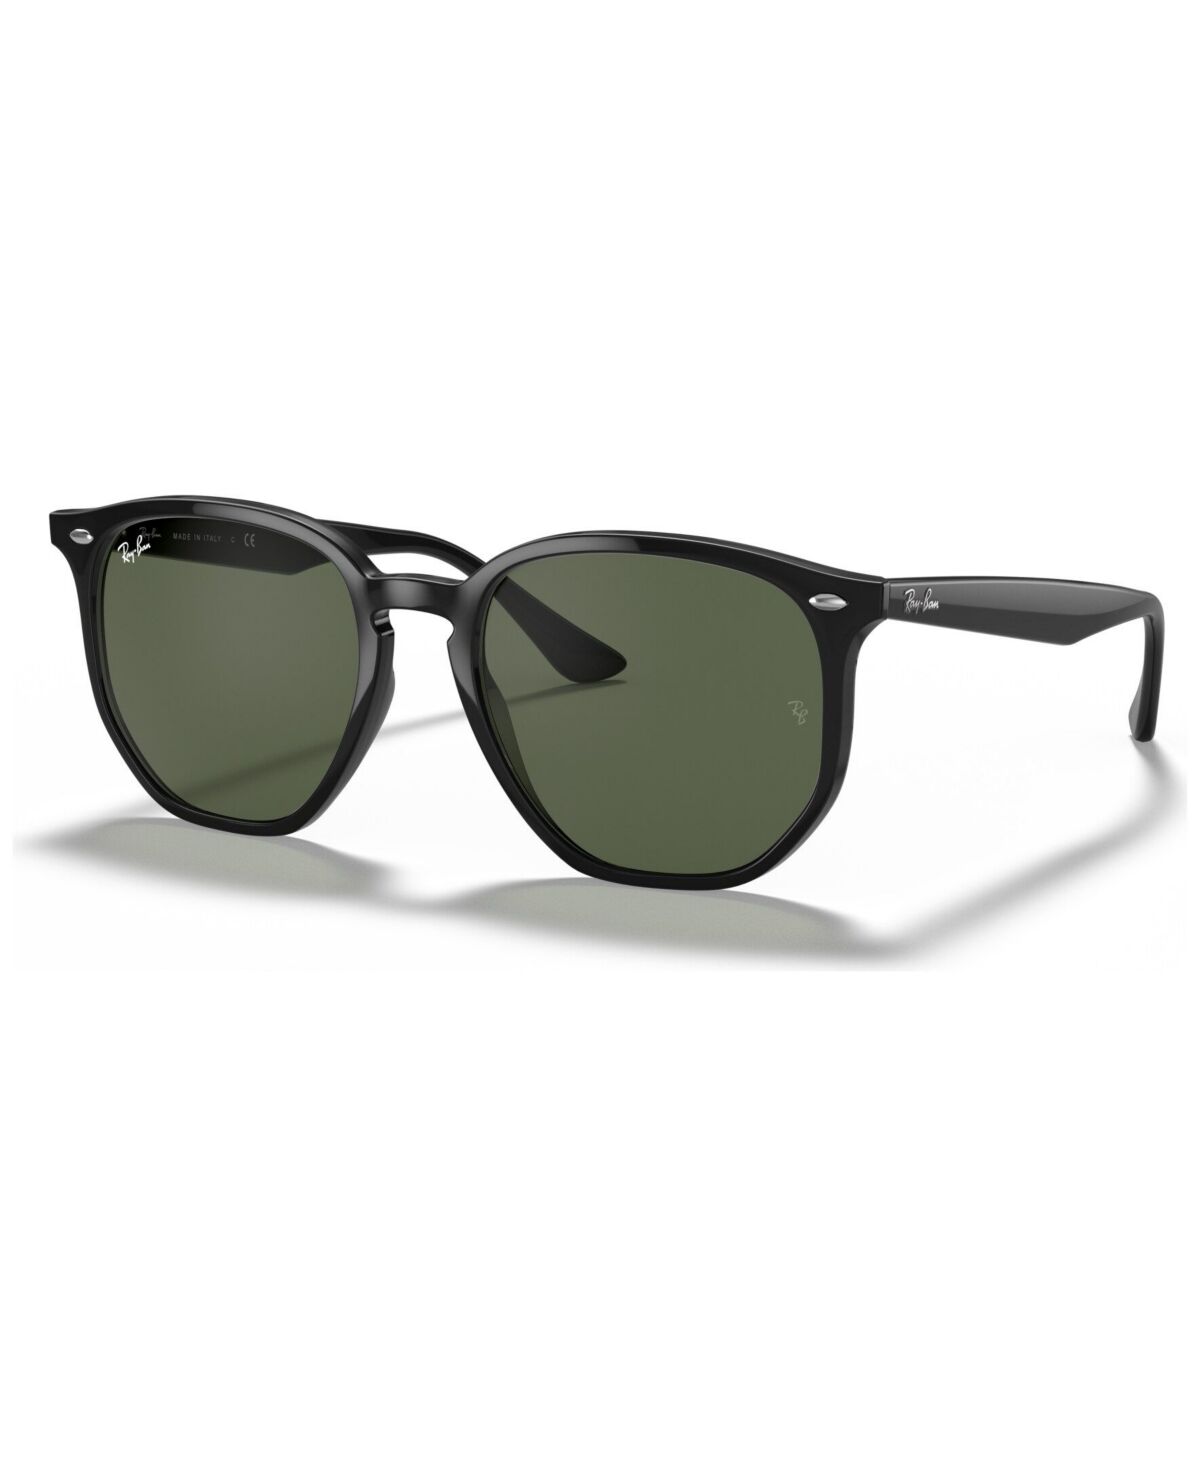 Ray-Ban Sunglasses, RB4306 - BLACK/GREEN